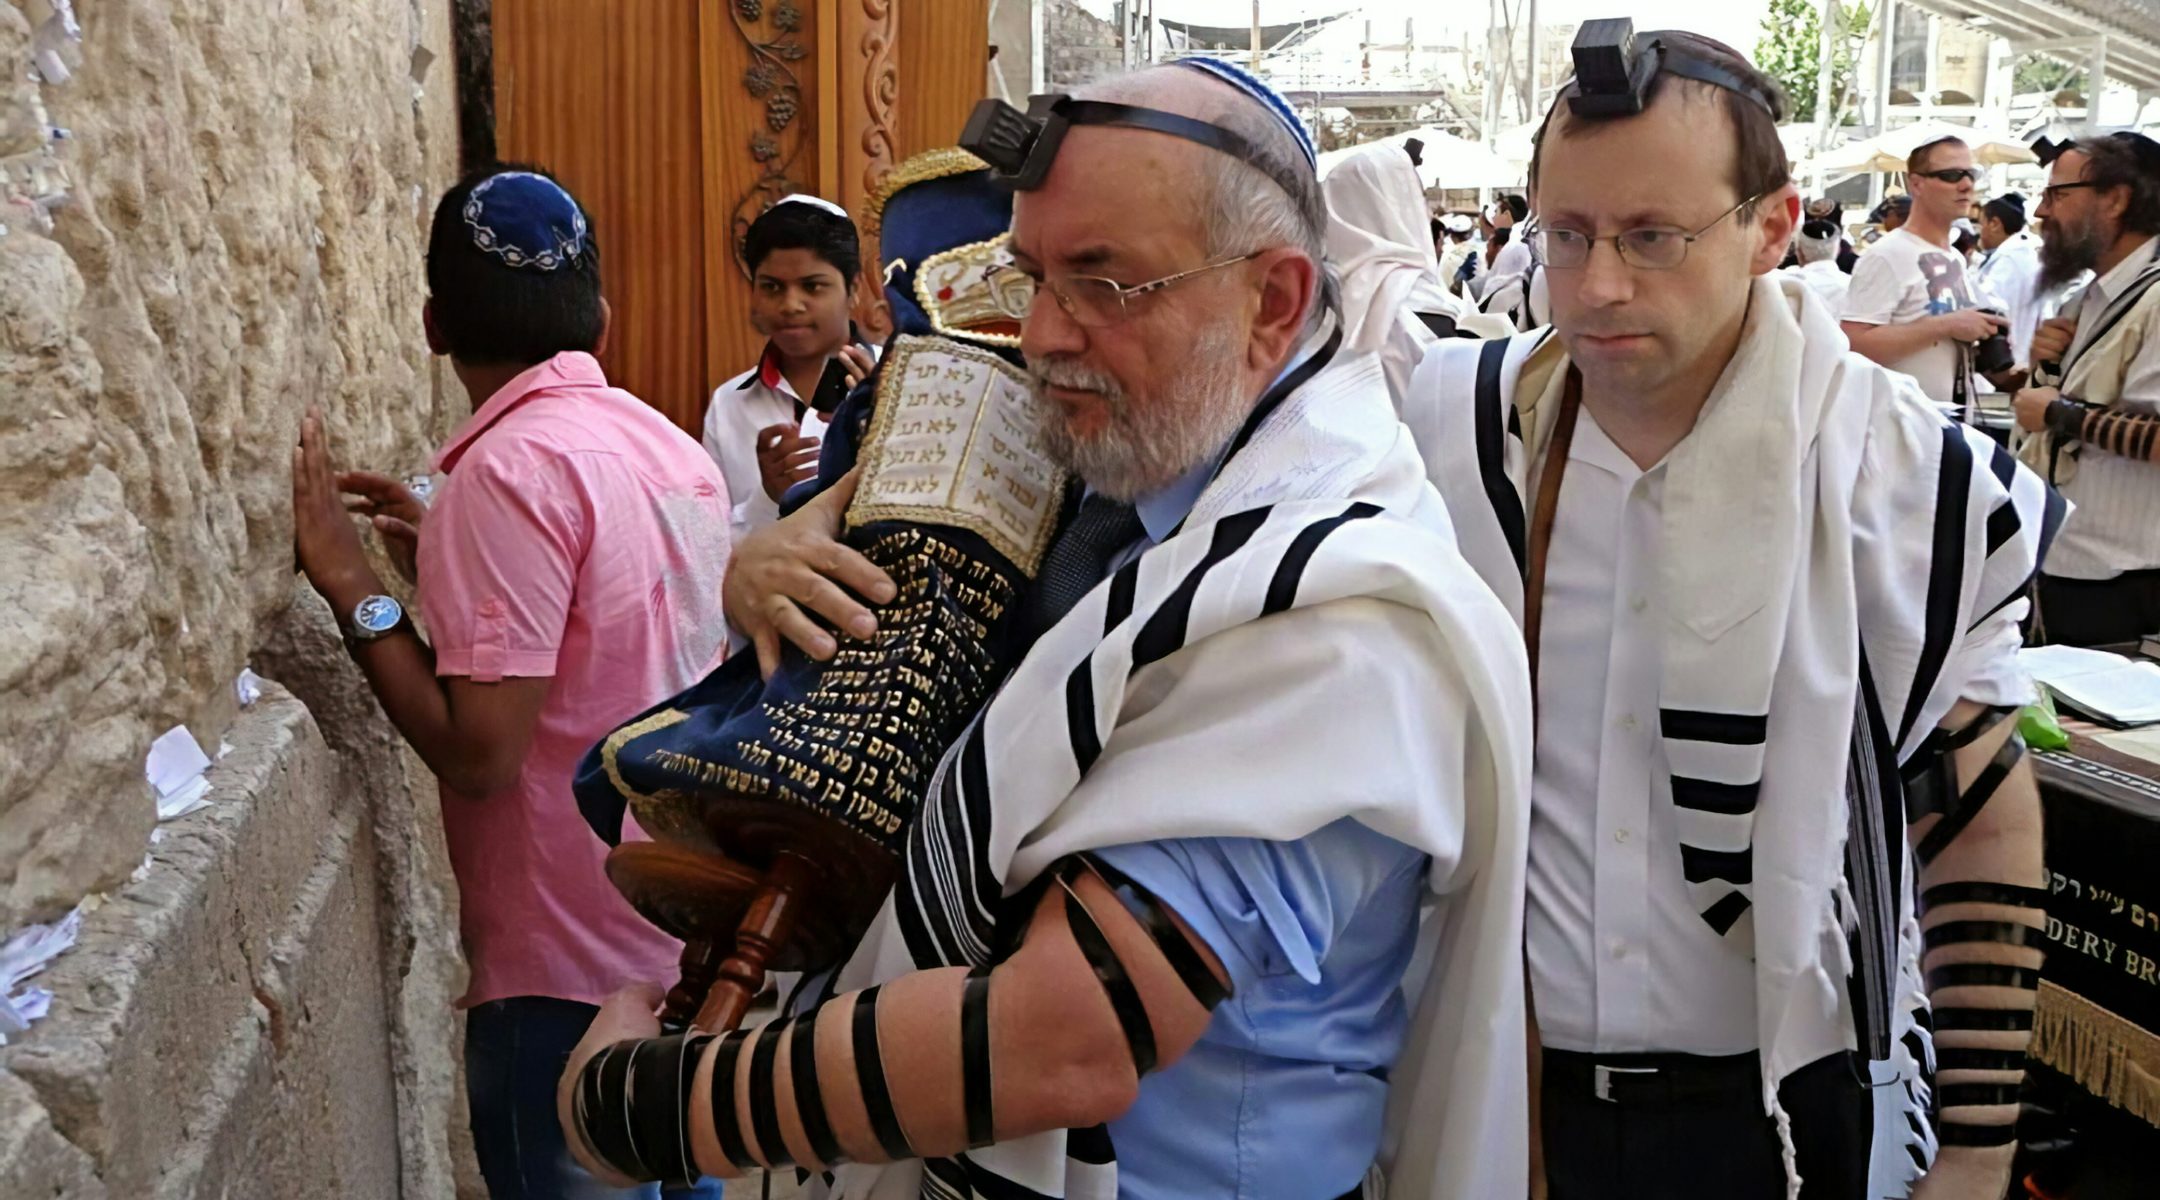 Mariusz Robert Opałko, holding a Torah scroll, and Michael Freund at the Western Wall in Jerusalem, Israel on June 9, 2013. (Courtesy of Shavei Israel)